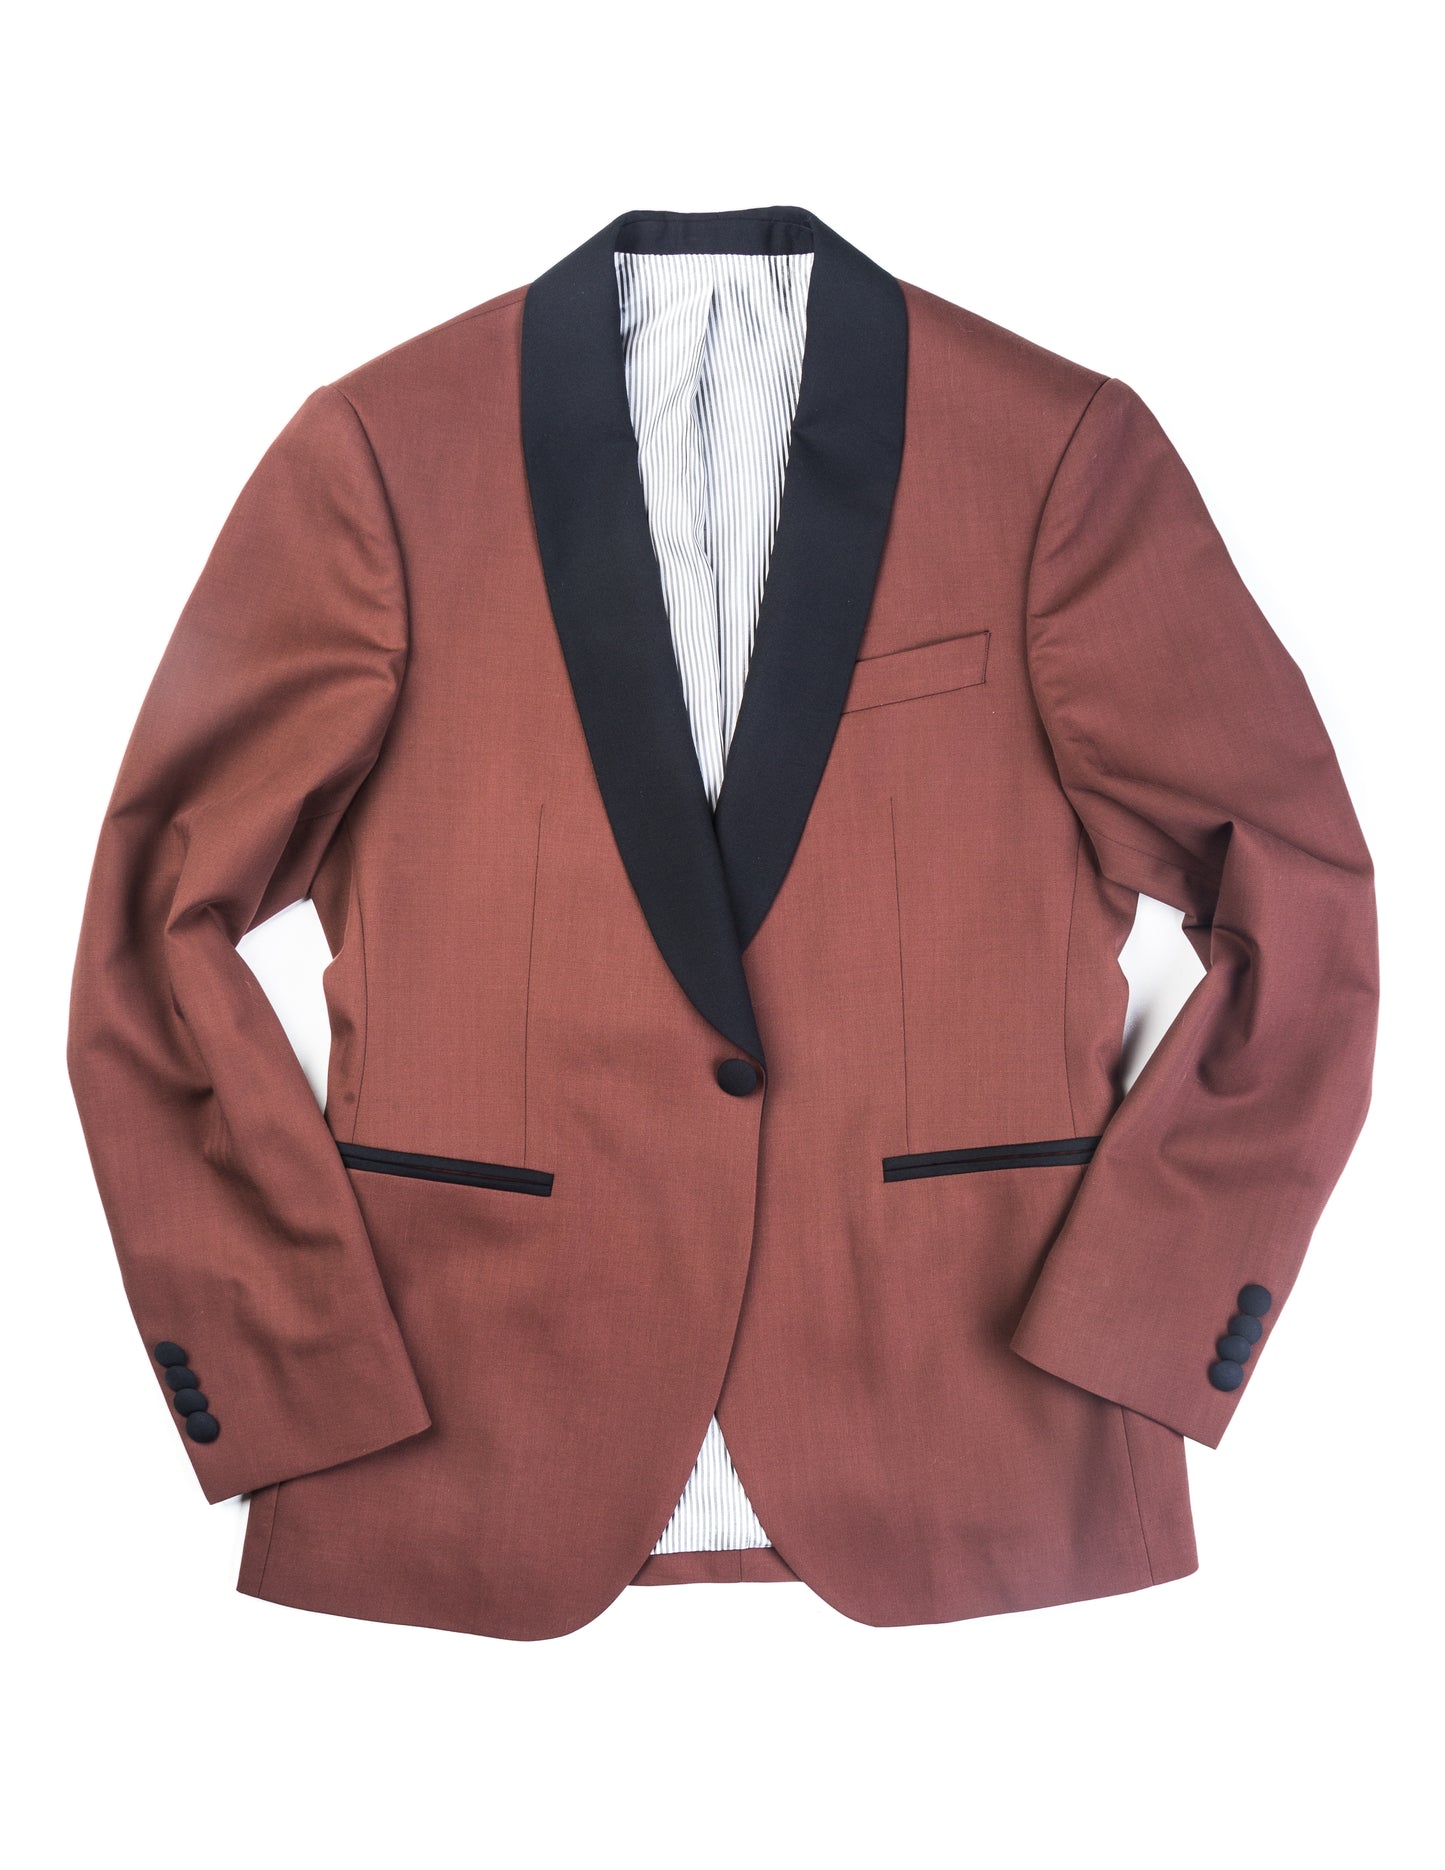 BKT50 Shawl Collar Dinner Jacket in Herringbone Wool/Cotton - Brick